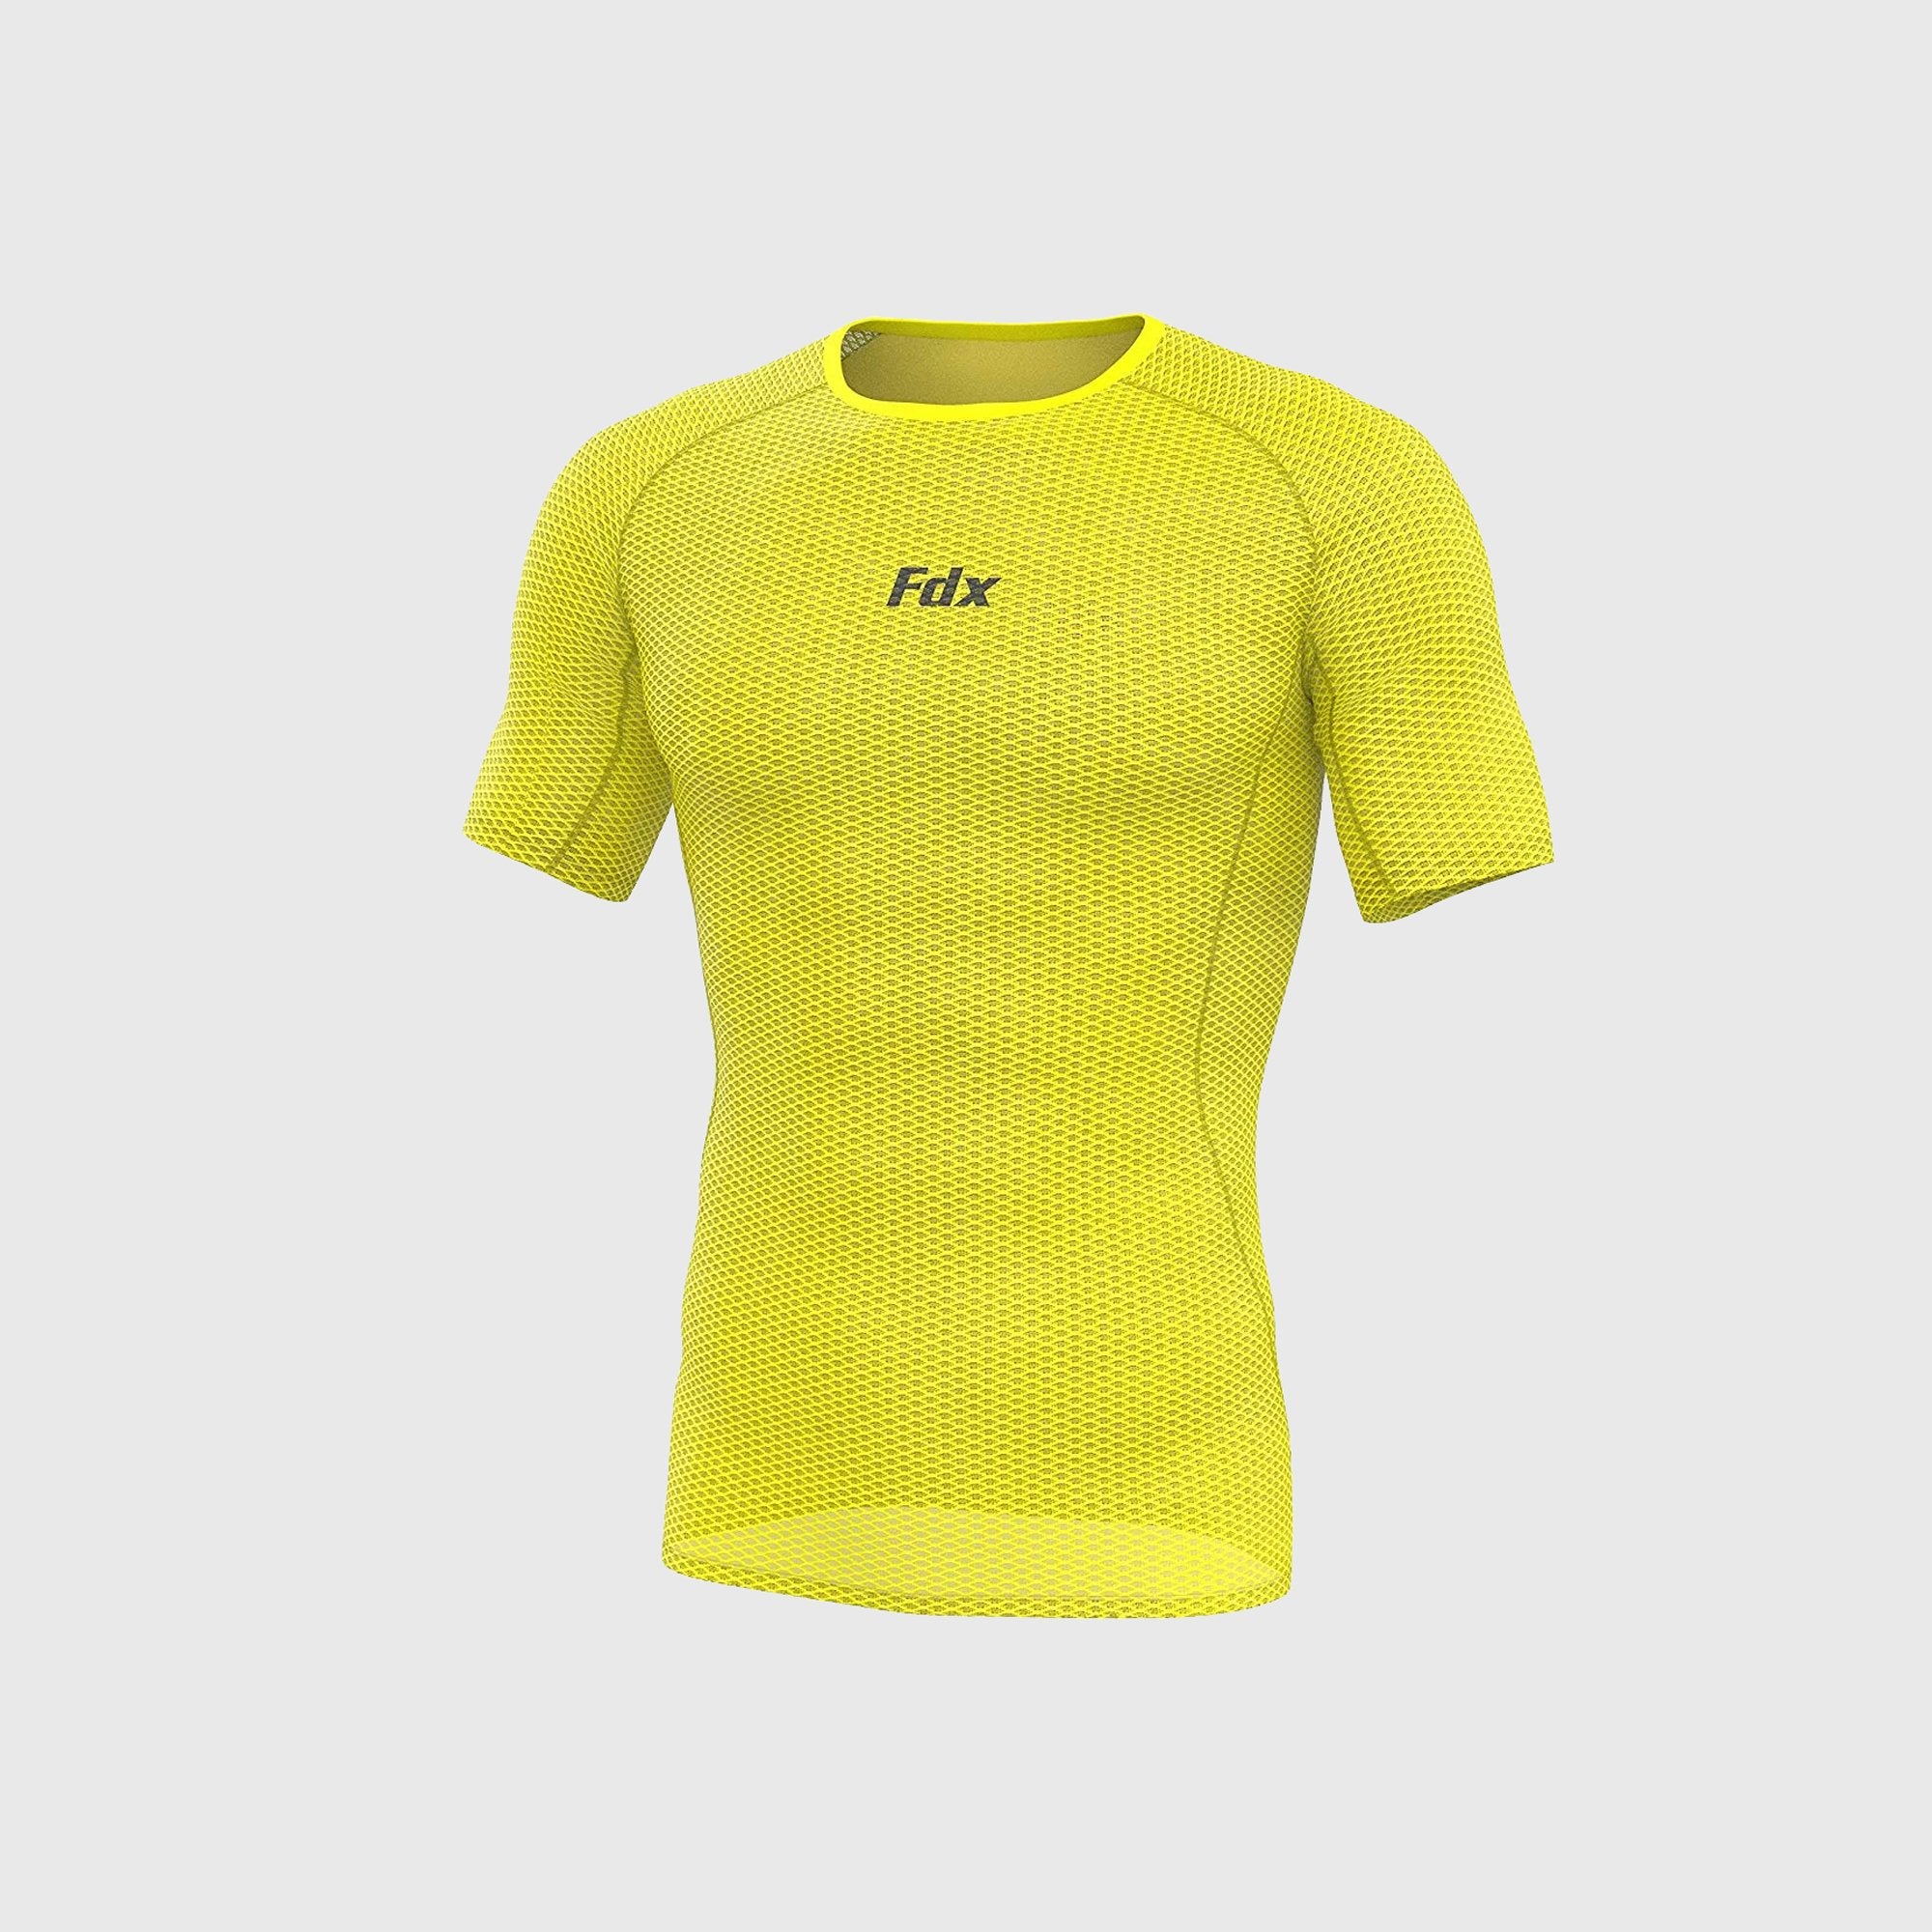 Fdx Aeroform Yellow Men's Short Sleeve Mesh Summer Cycling Top